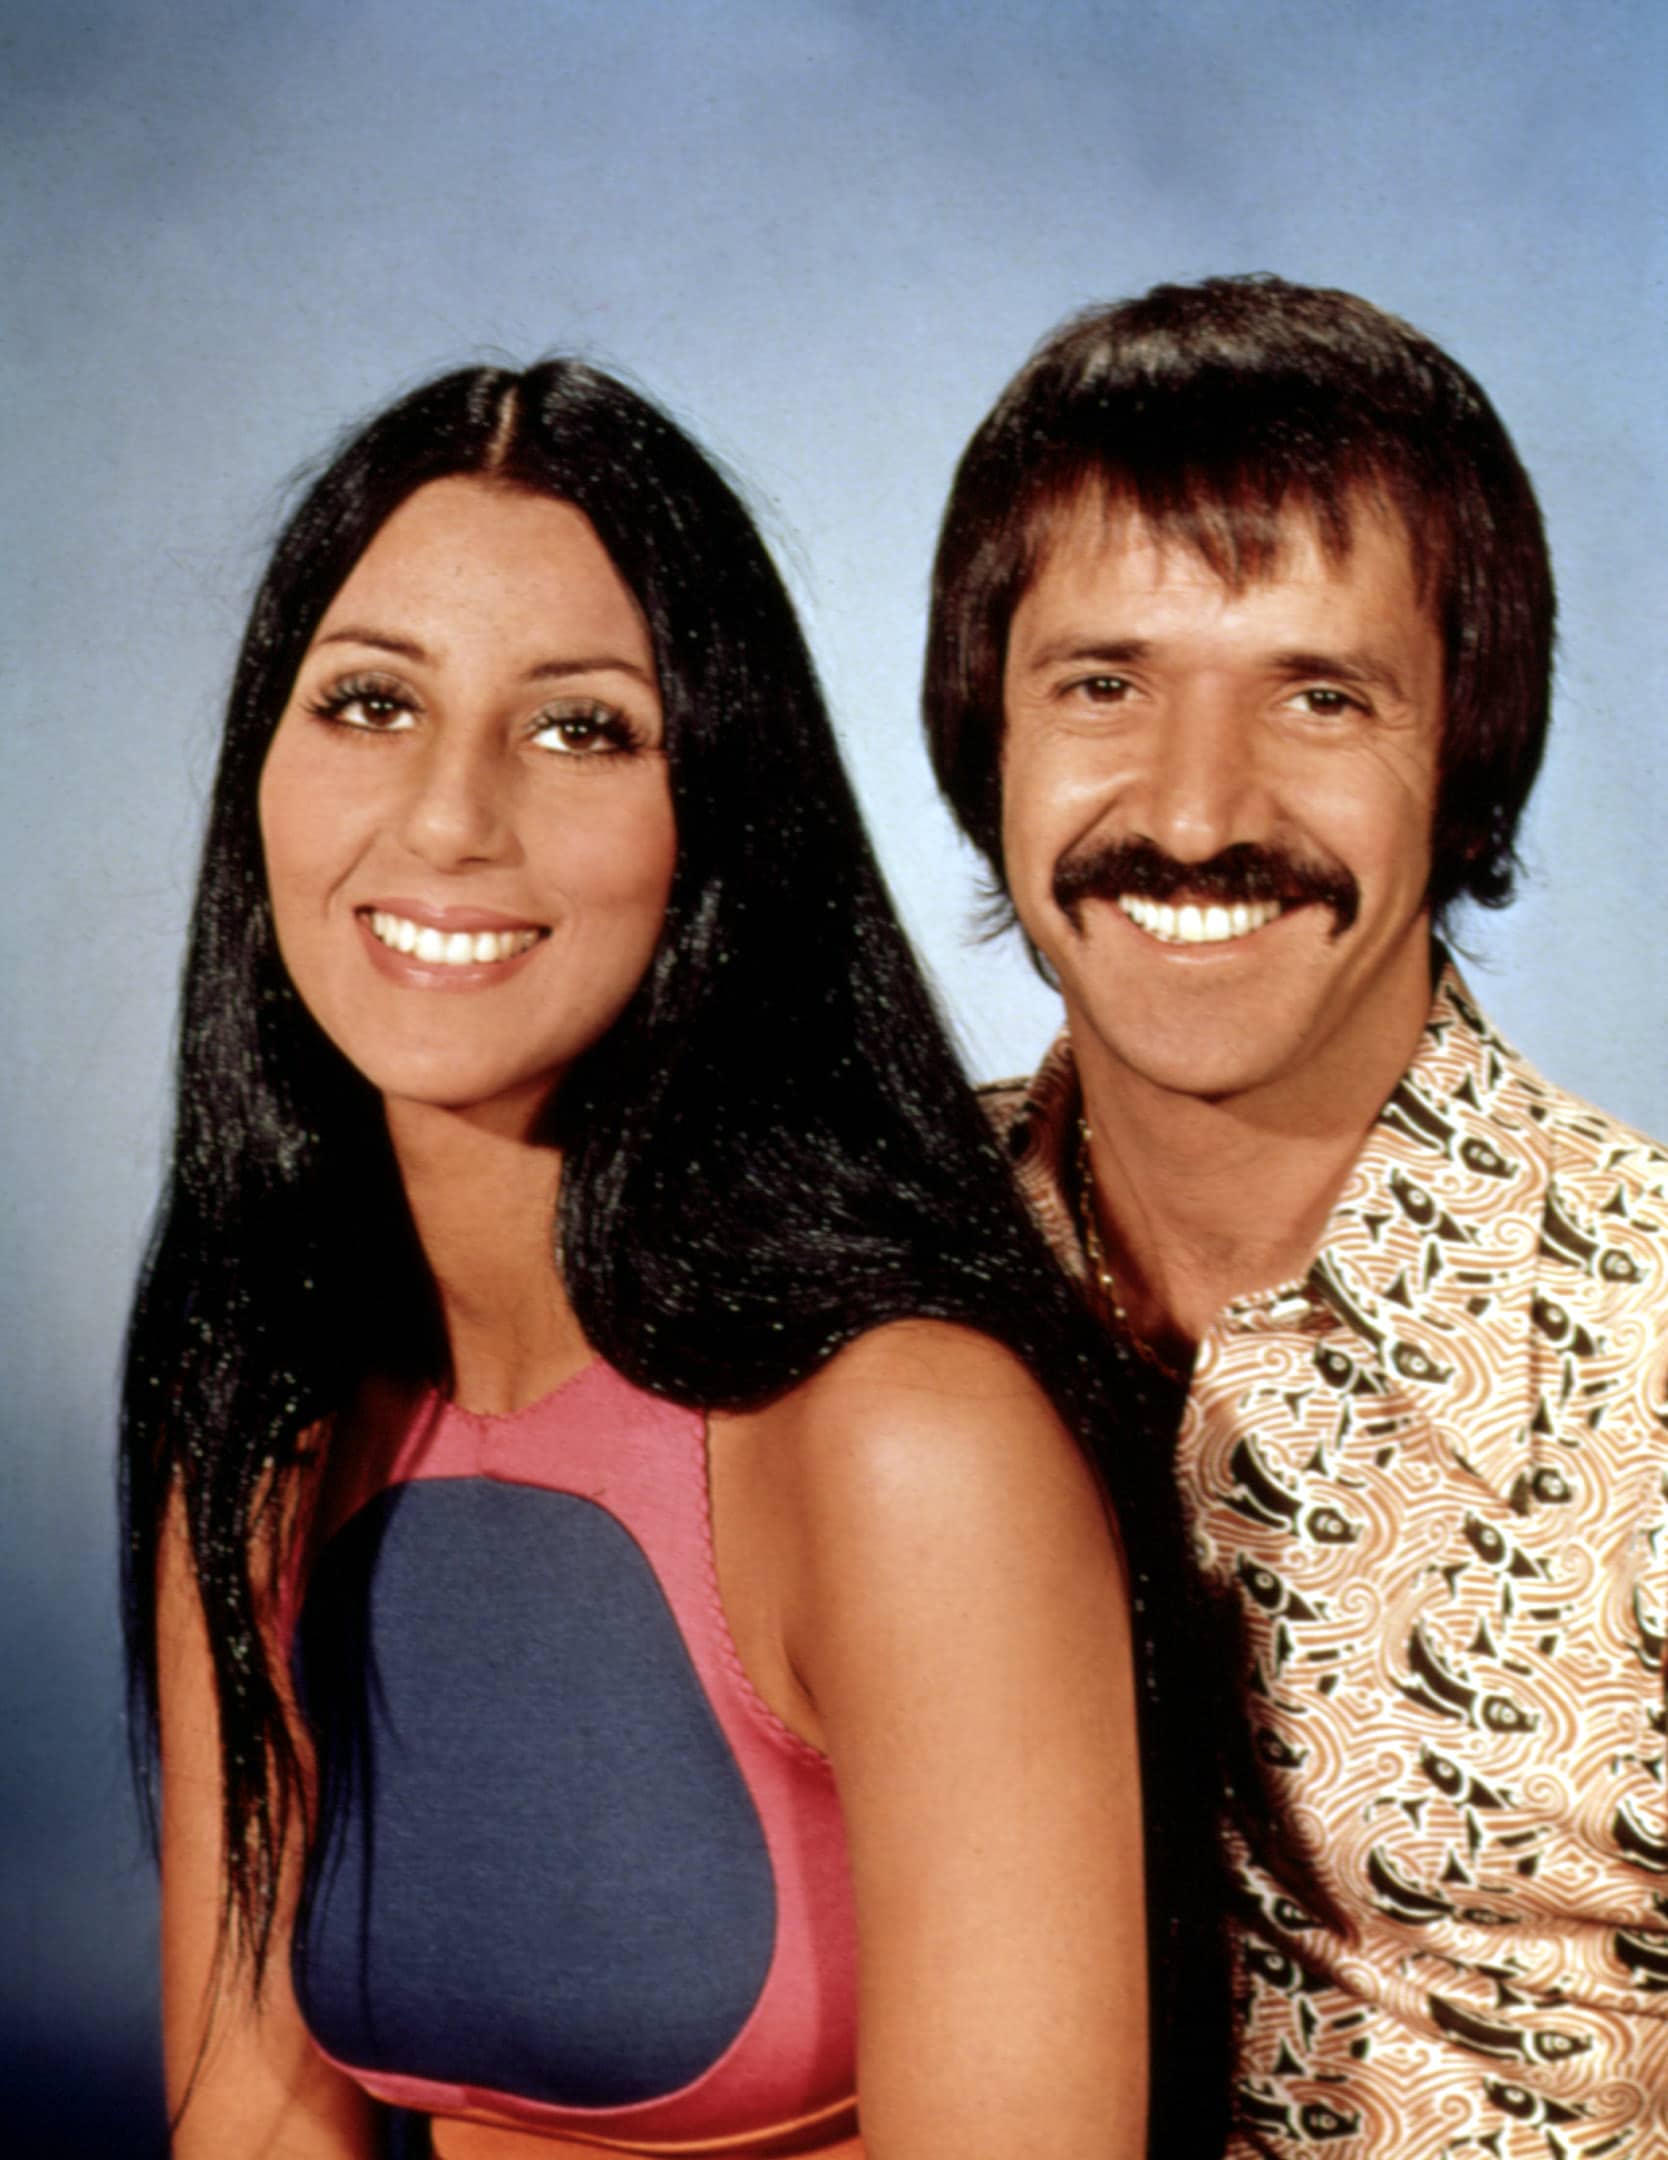 Sonny & Cher in the 1970s